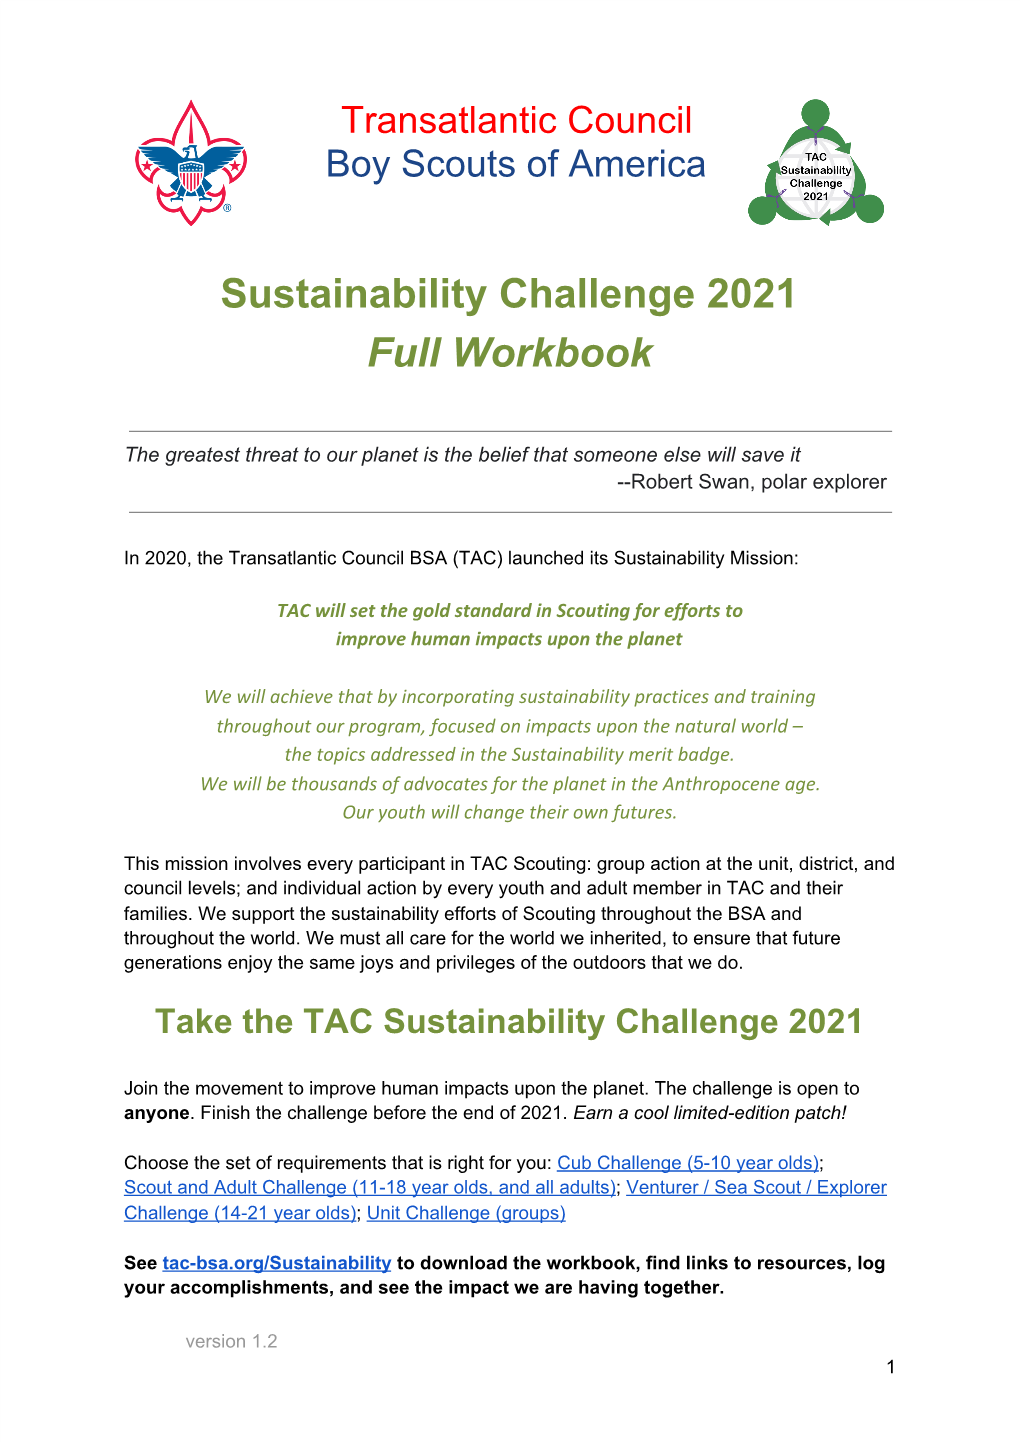 Sustainability Challenge 2021 Full Workbook